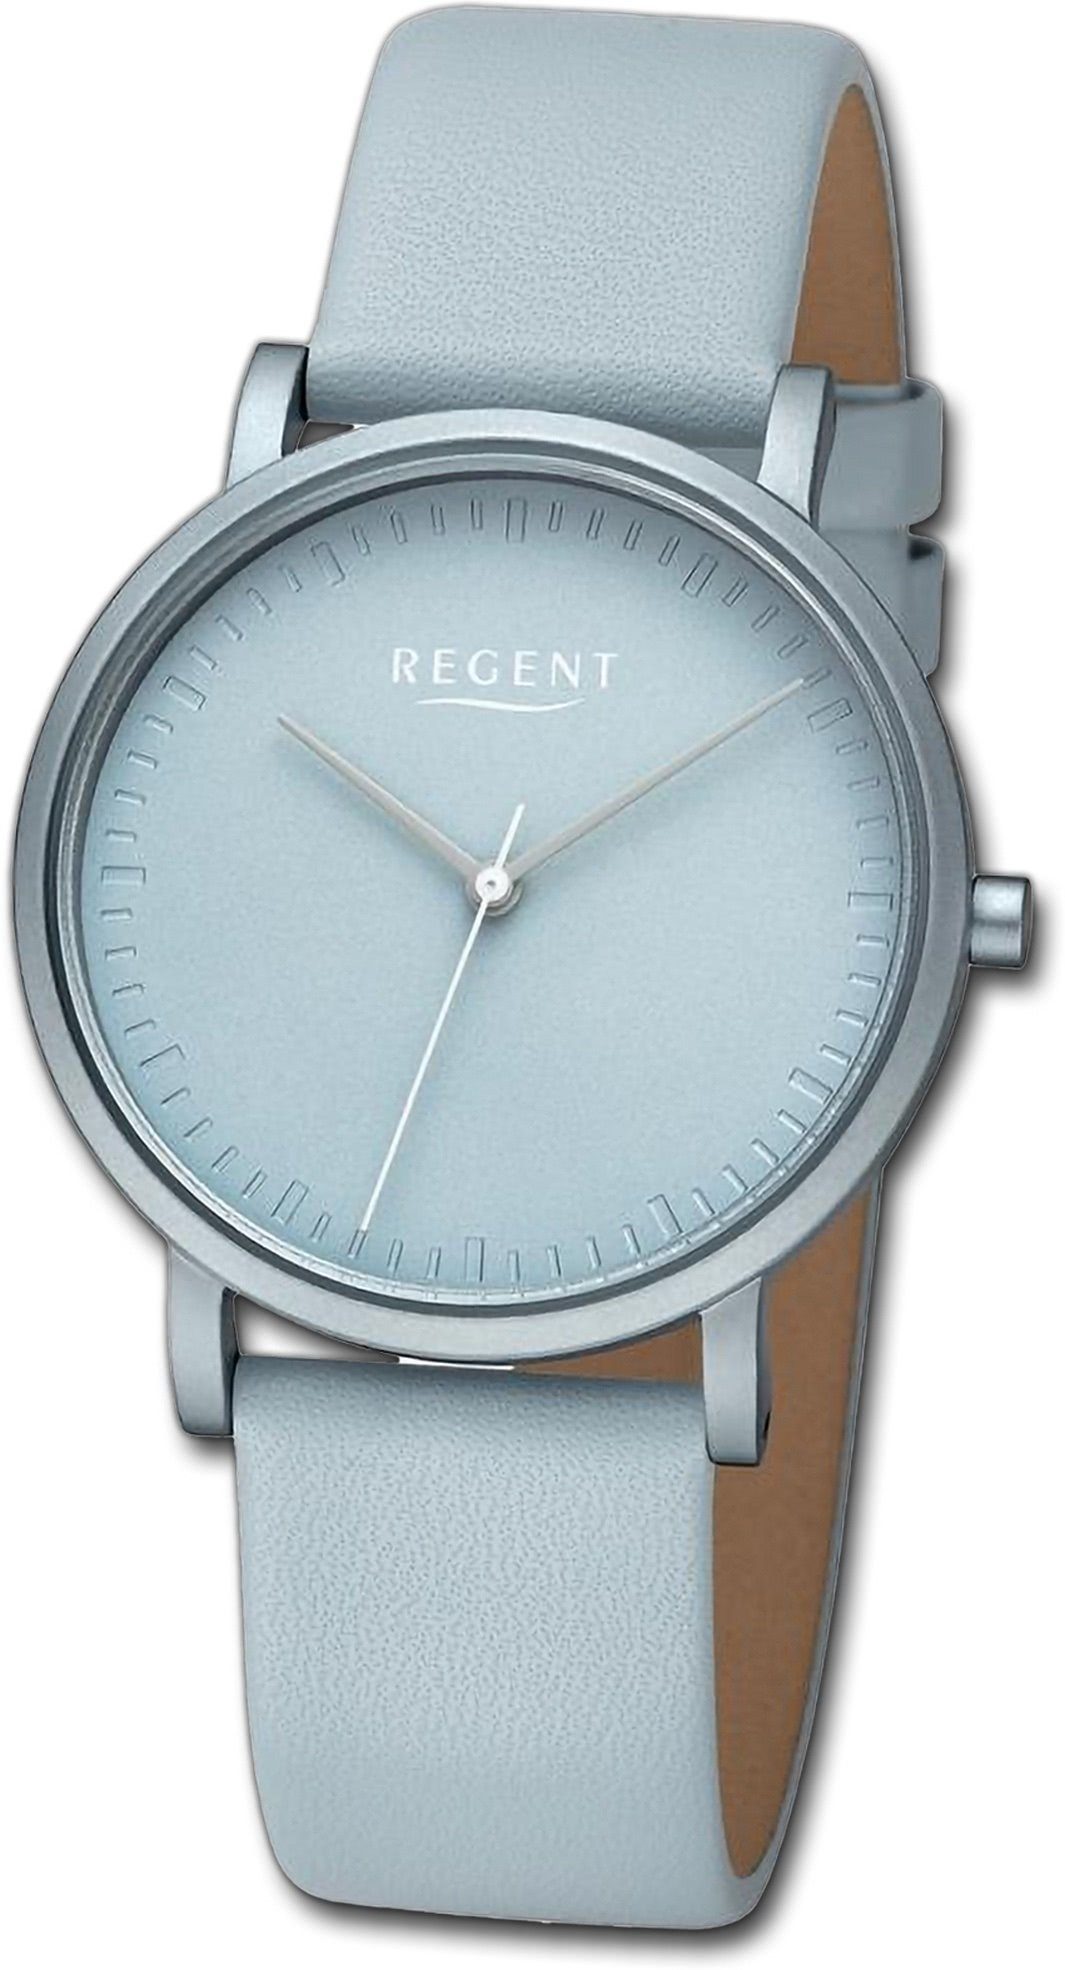 Regent Quarzuhr Regent Damen Armbanduhr Analog, Damenuhr Lederarmband graublau, rundes Gehäuse, extra groß (ca. 36mm)